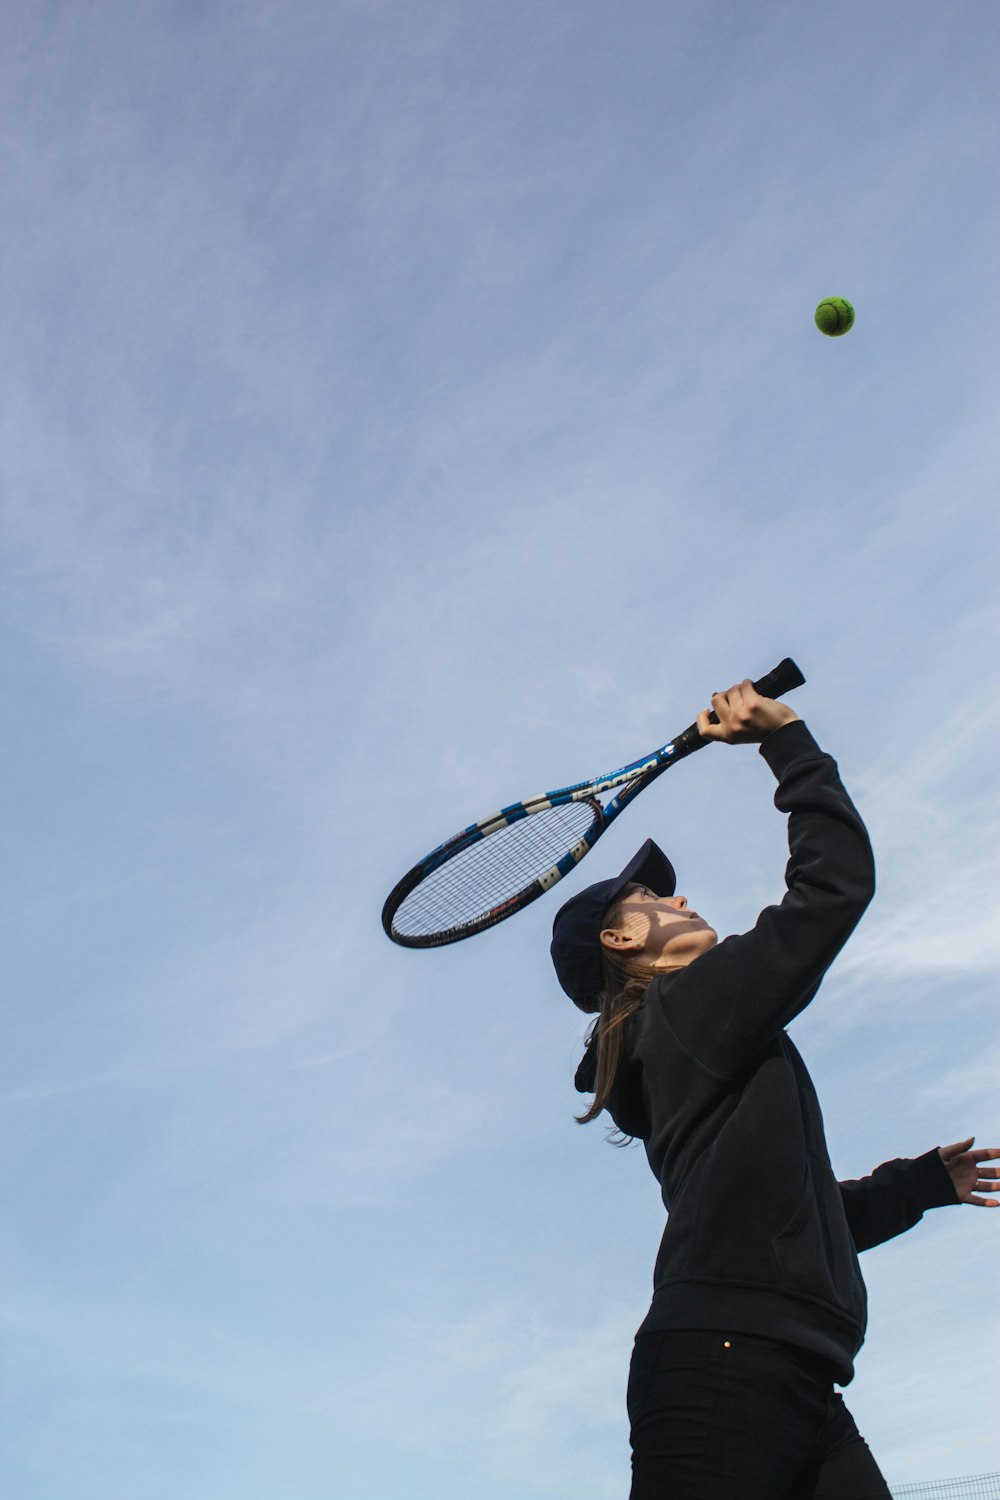 man in black jacket holding tennis racket